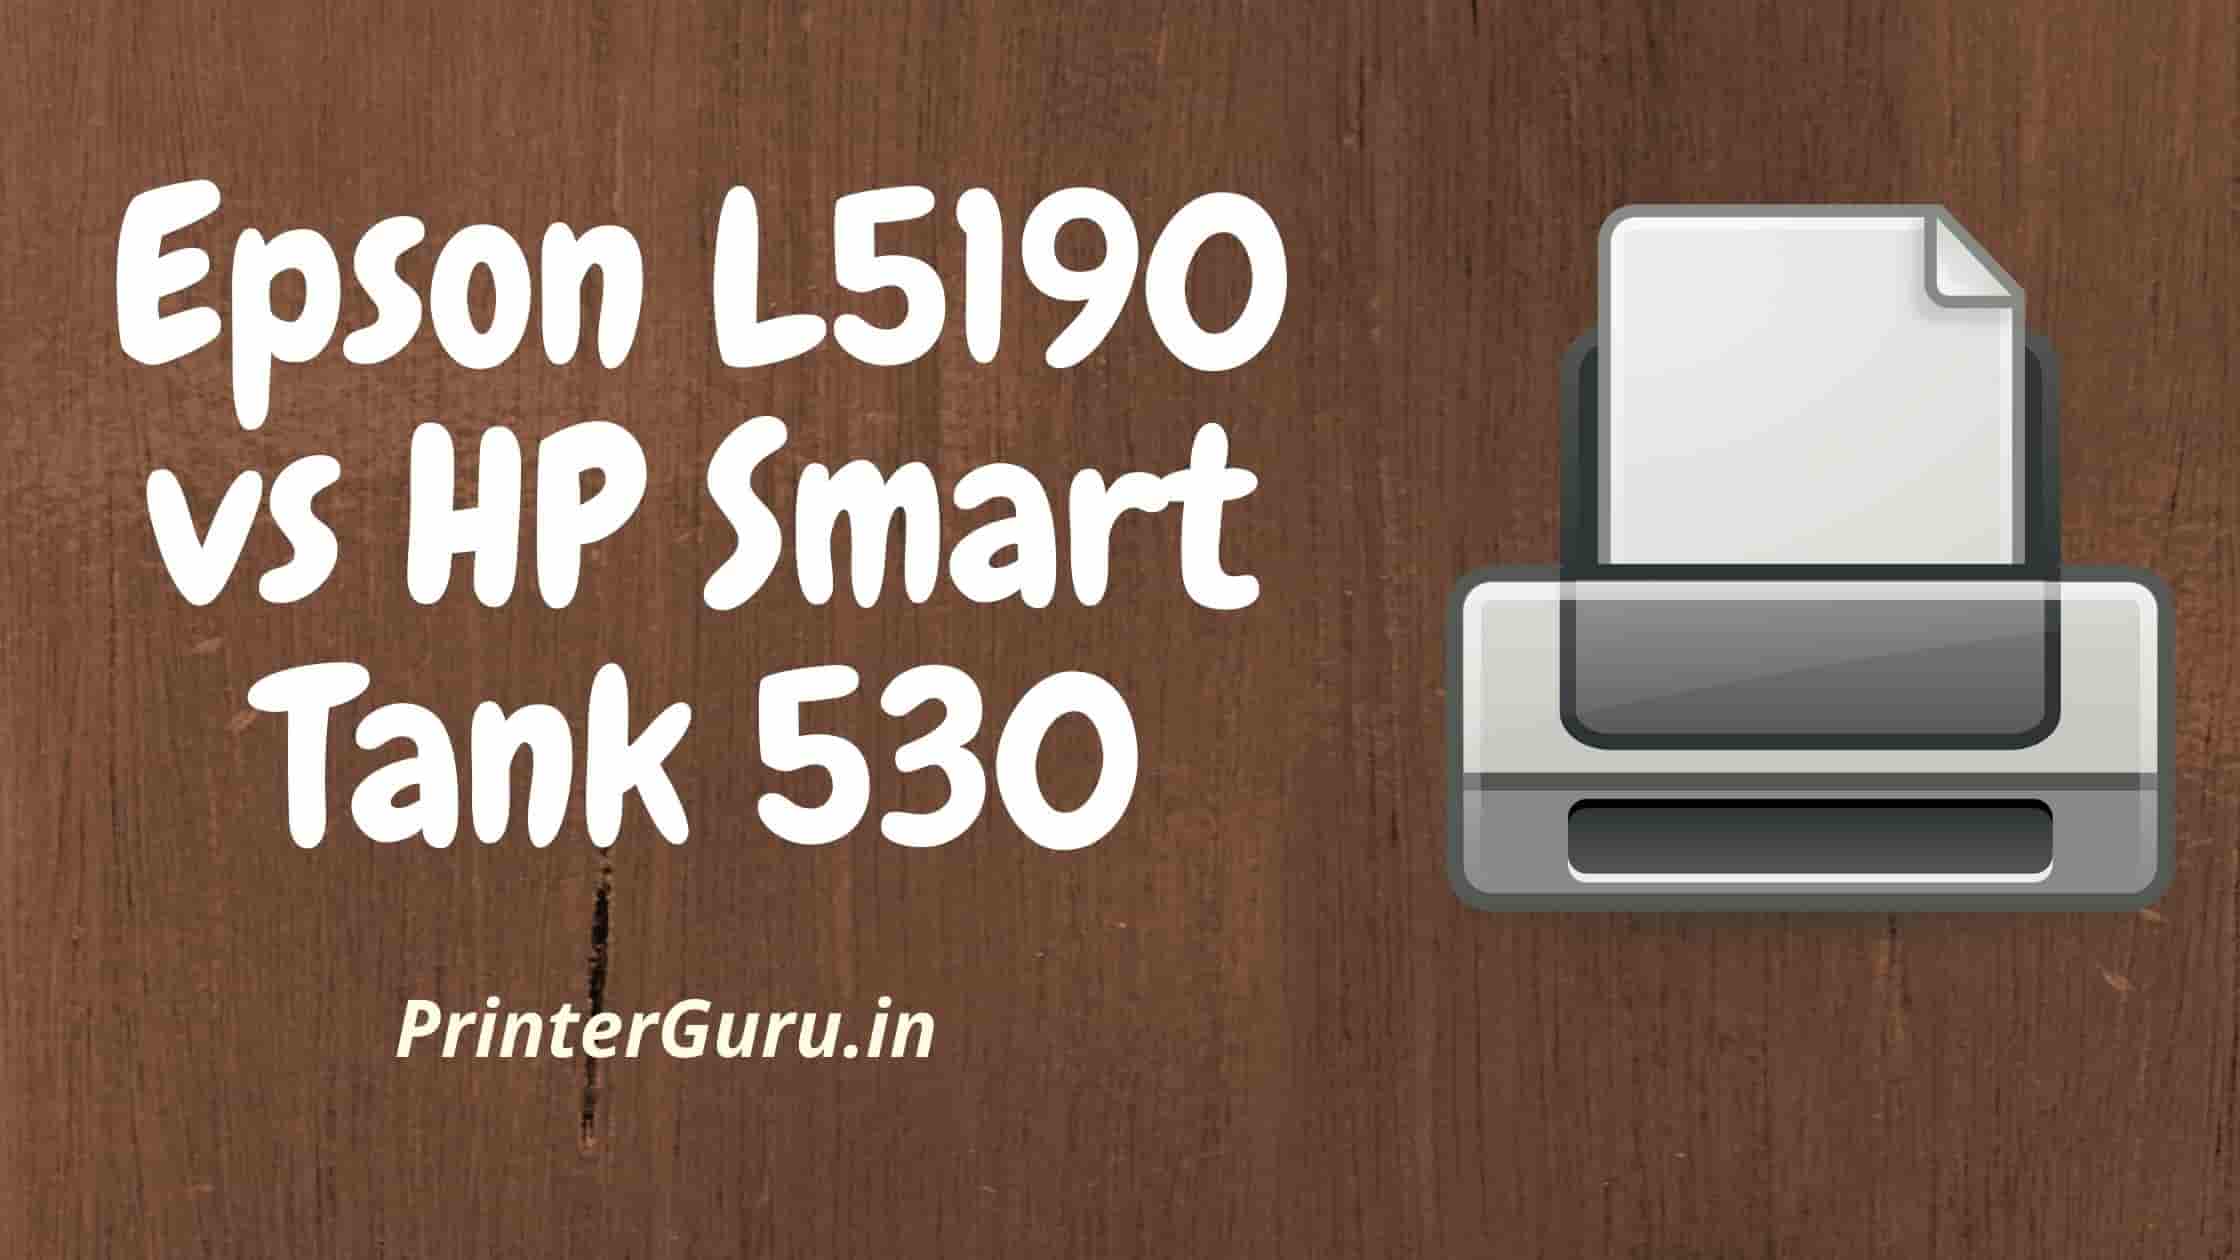 Epson L5190 vs HP Smart Tank 530